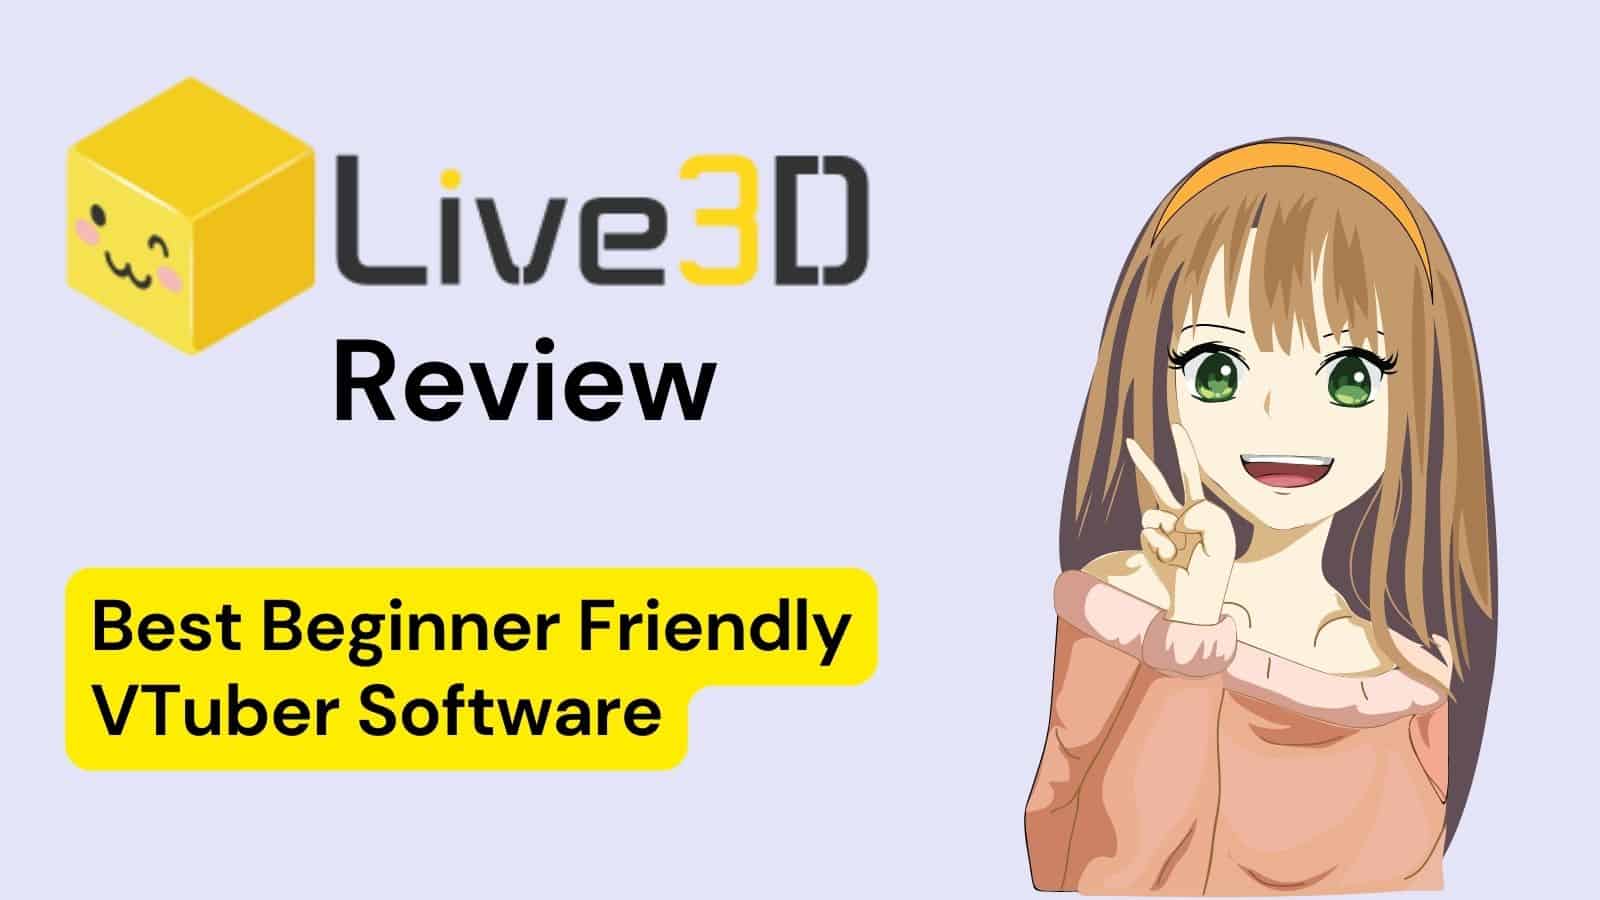 Live3D Review - Best Beginner Friendly VTuber Software